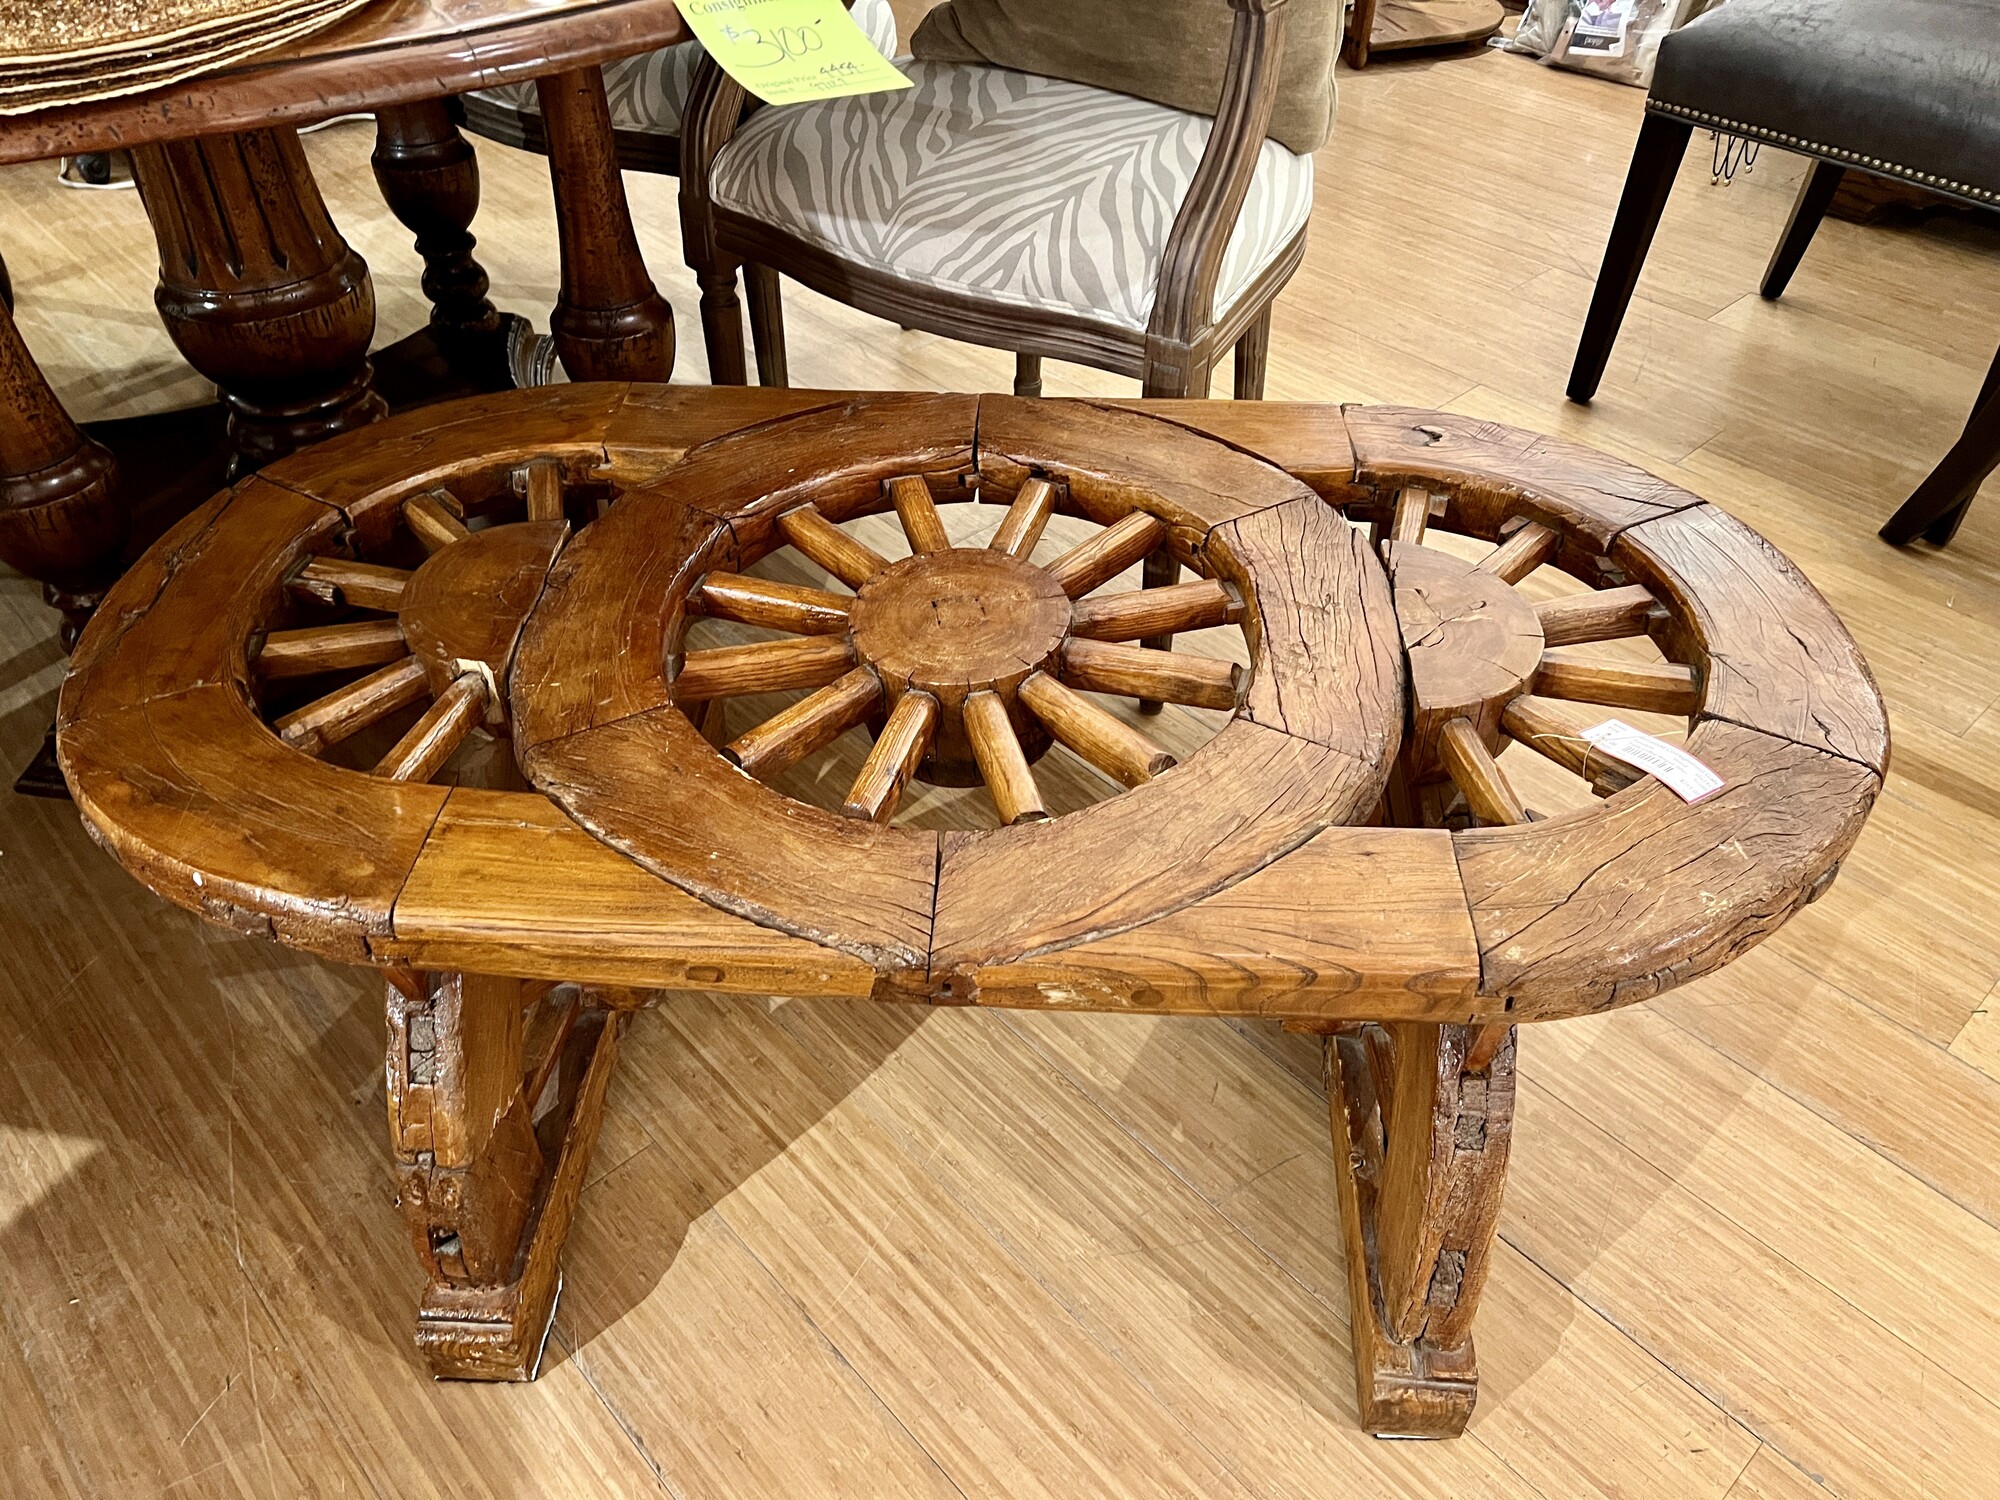 Wooden Wagon Wheel Coffee Table
Size: 45x24x17